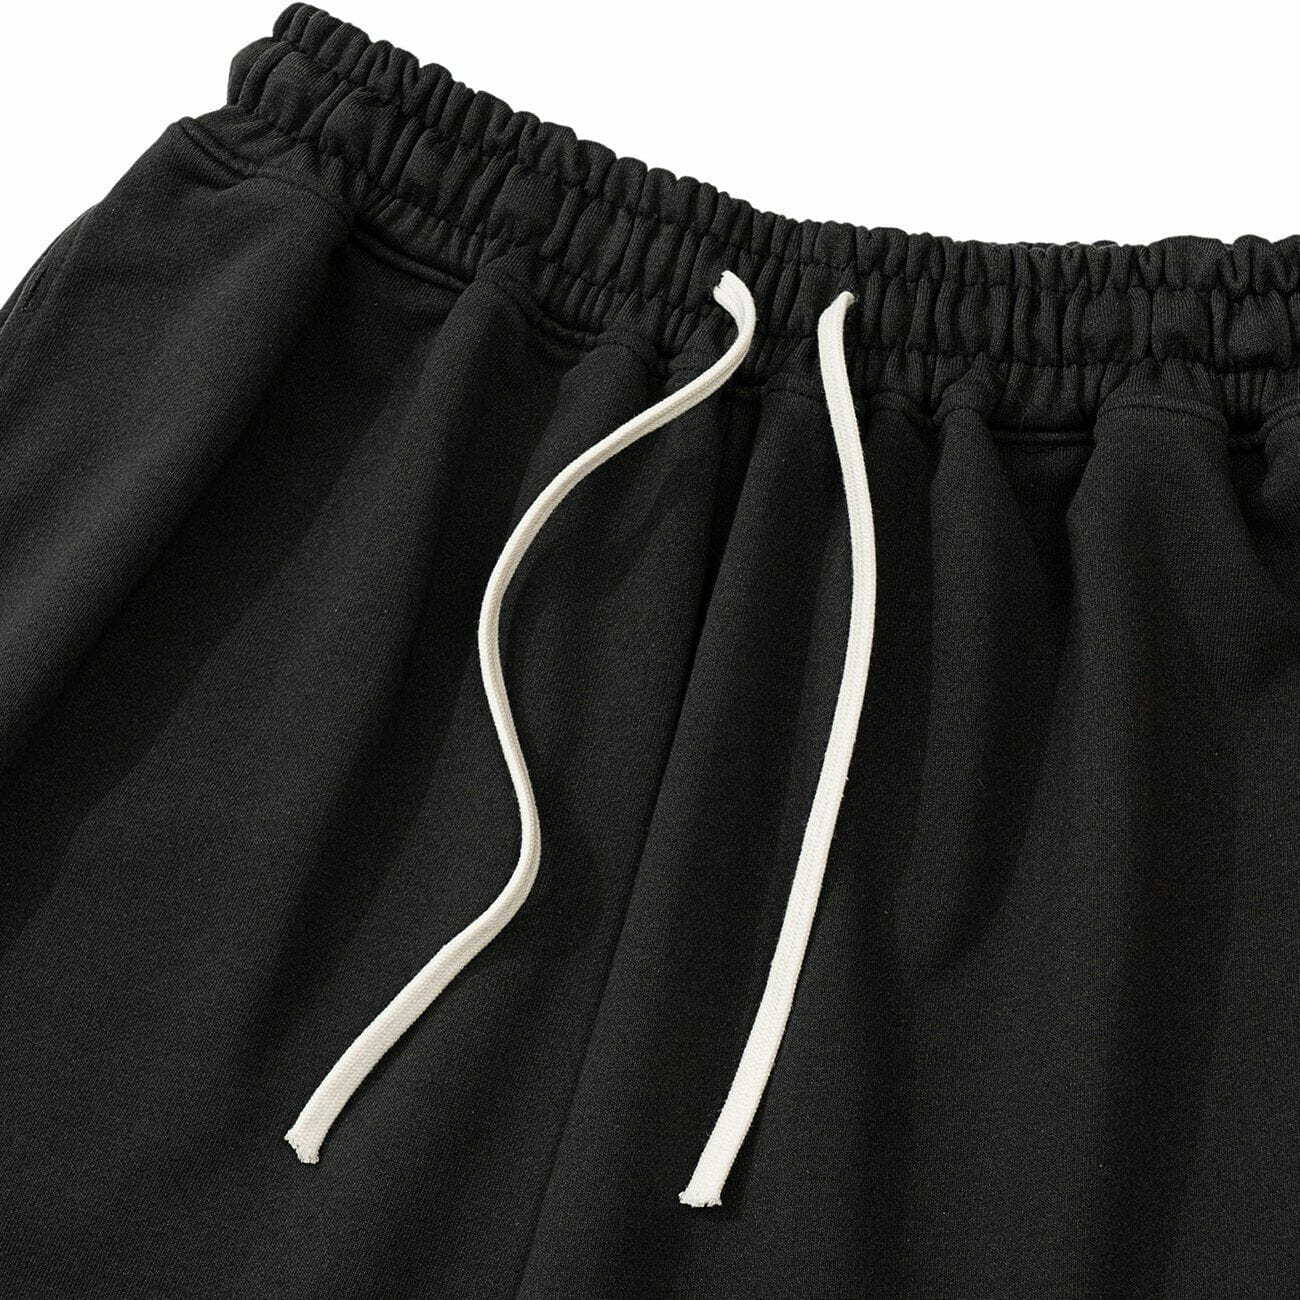 ripped drawstring shorts edgy streetwear essential 8970